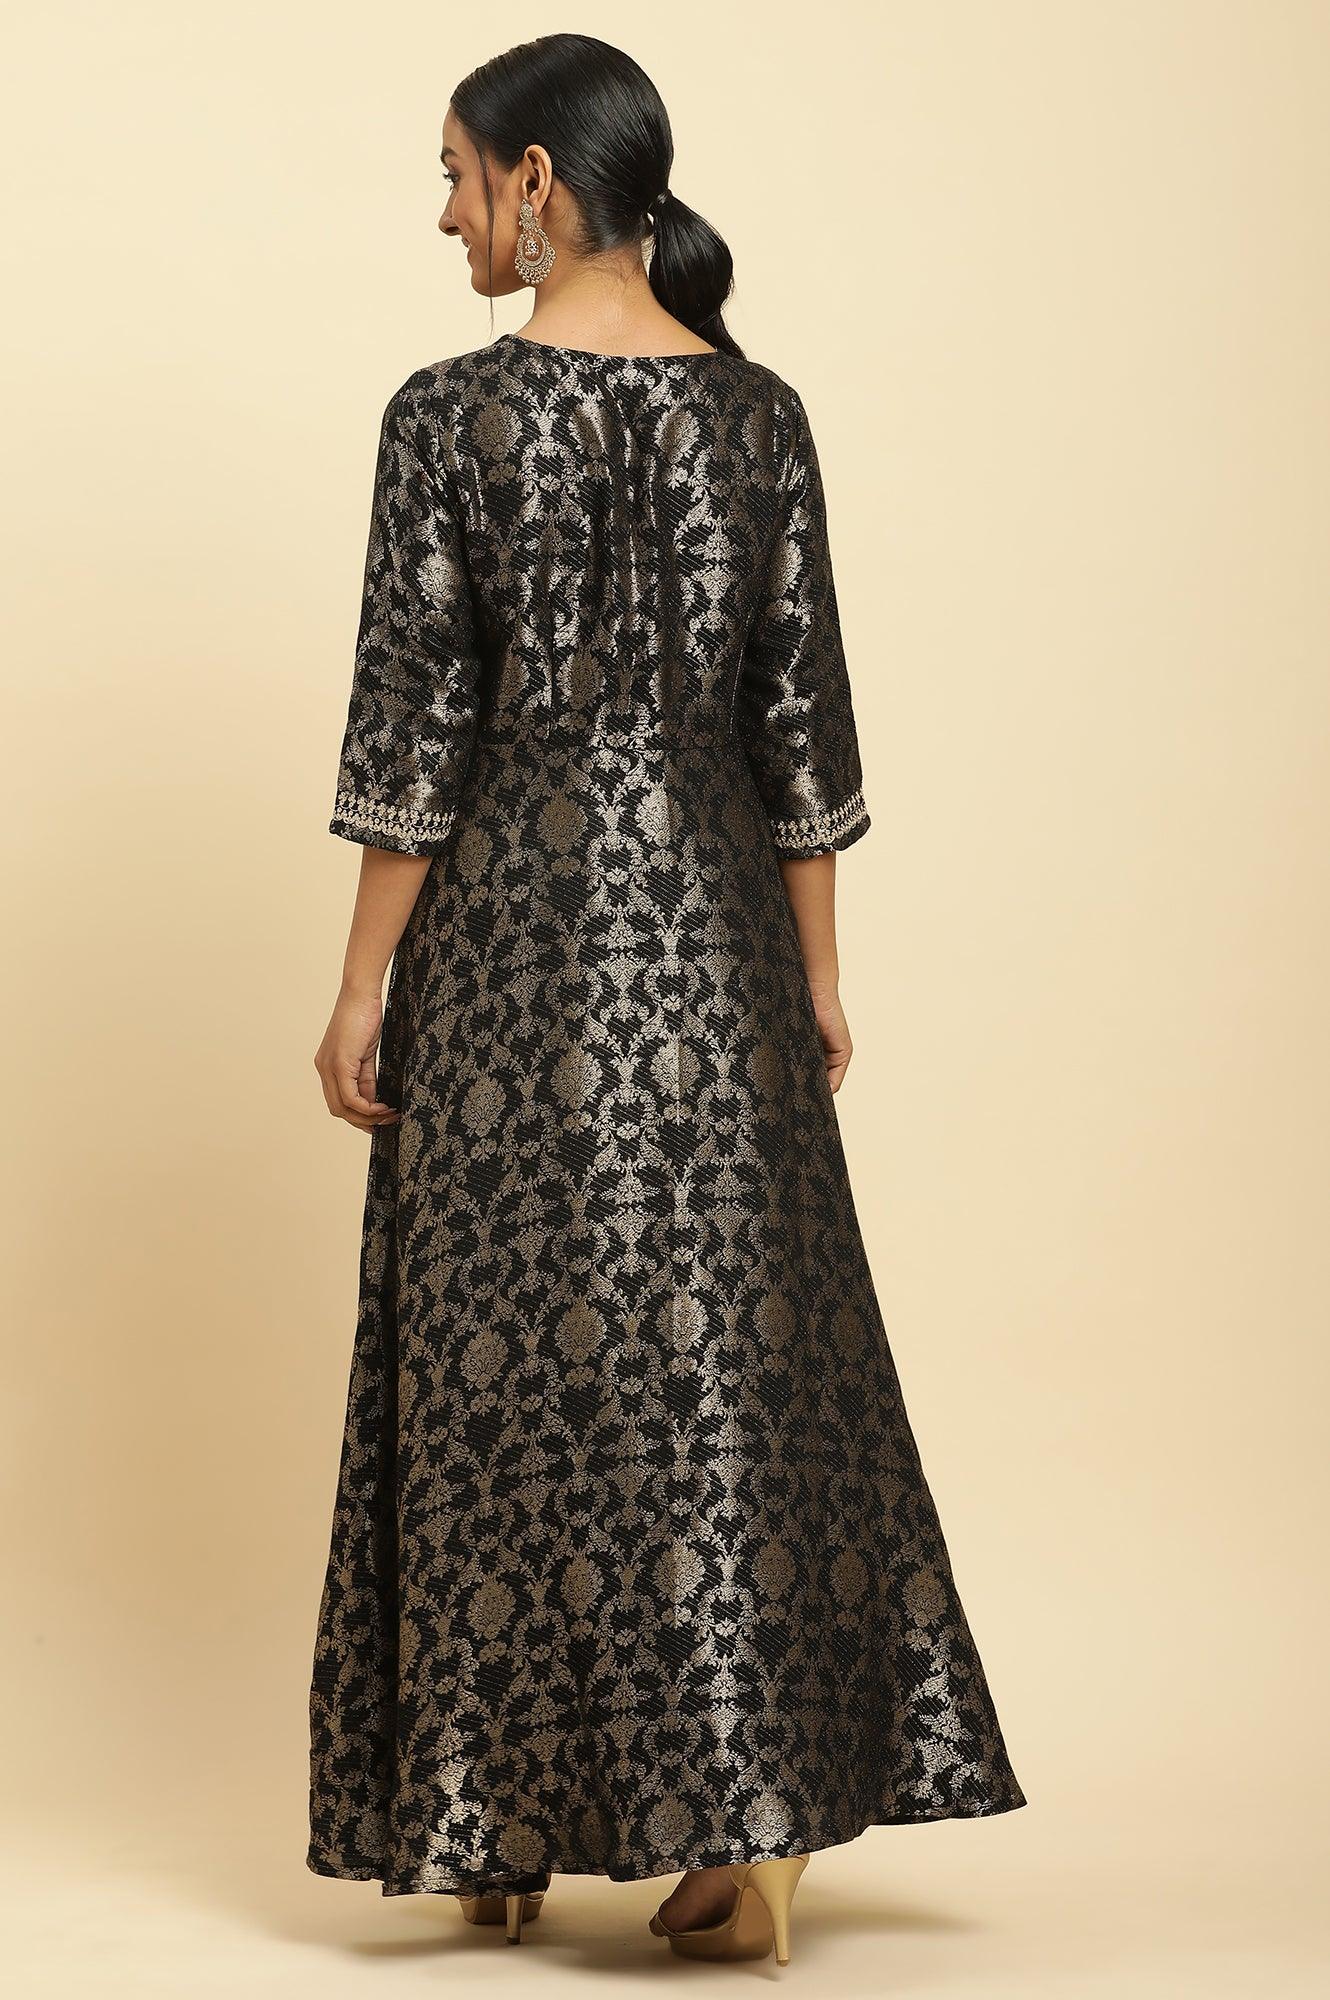 Black Jacquard Embroidered Ethnic Dress - wforwoman